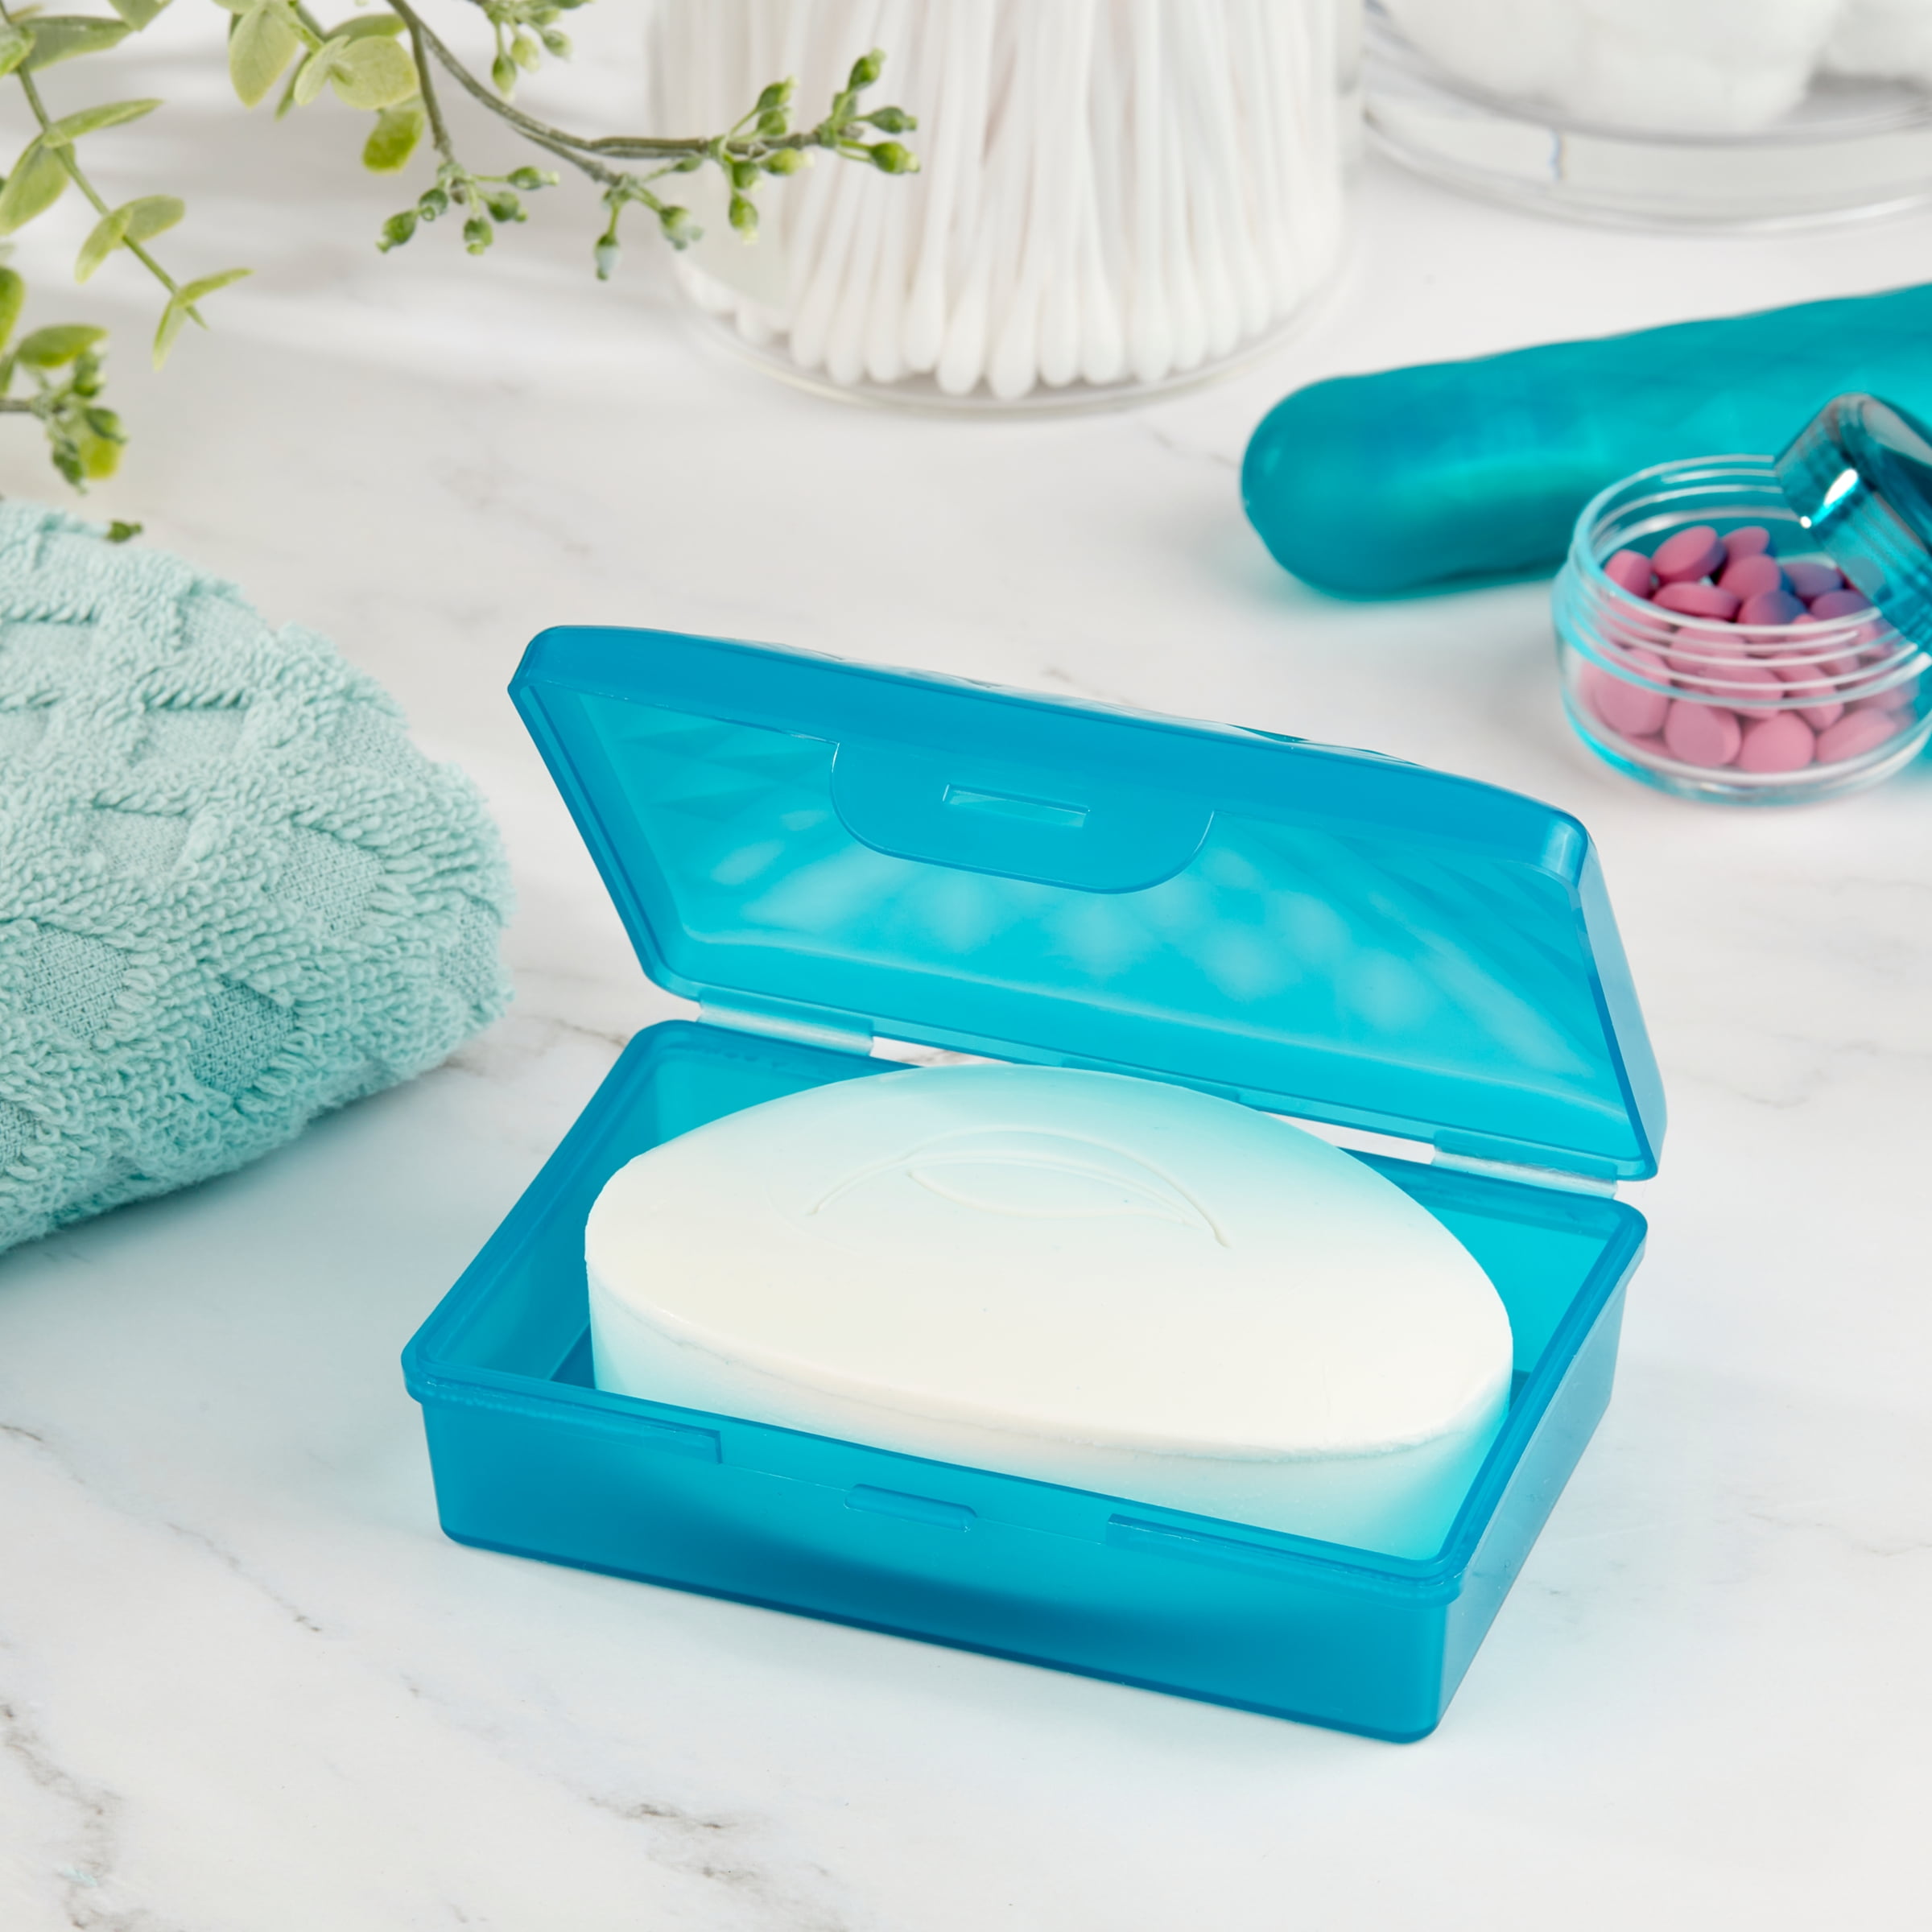 Shell Shape Plastic Soap Box Drain Tray Storage Dish Holder Container Portable 